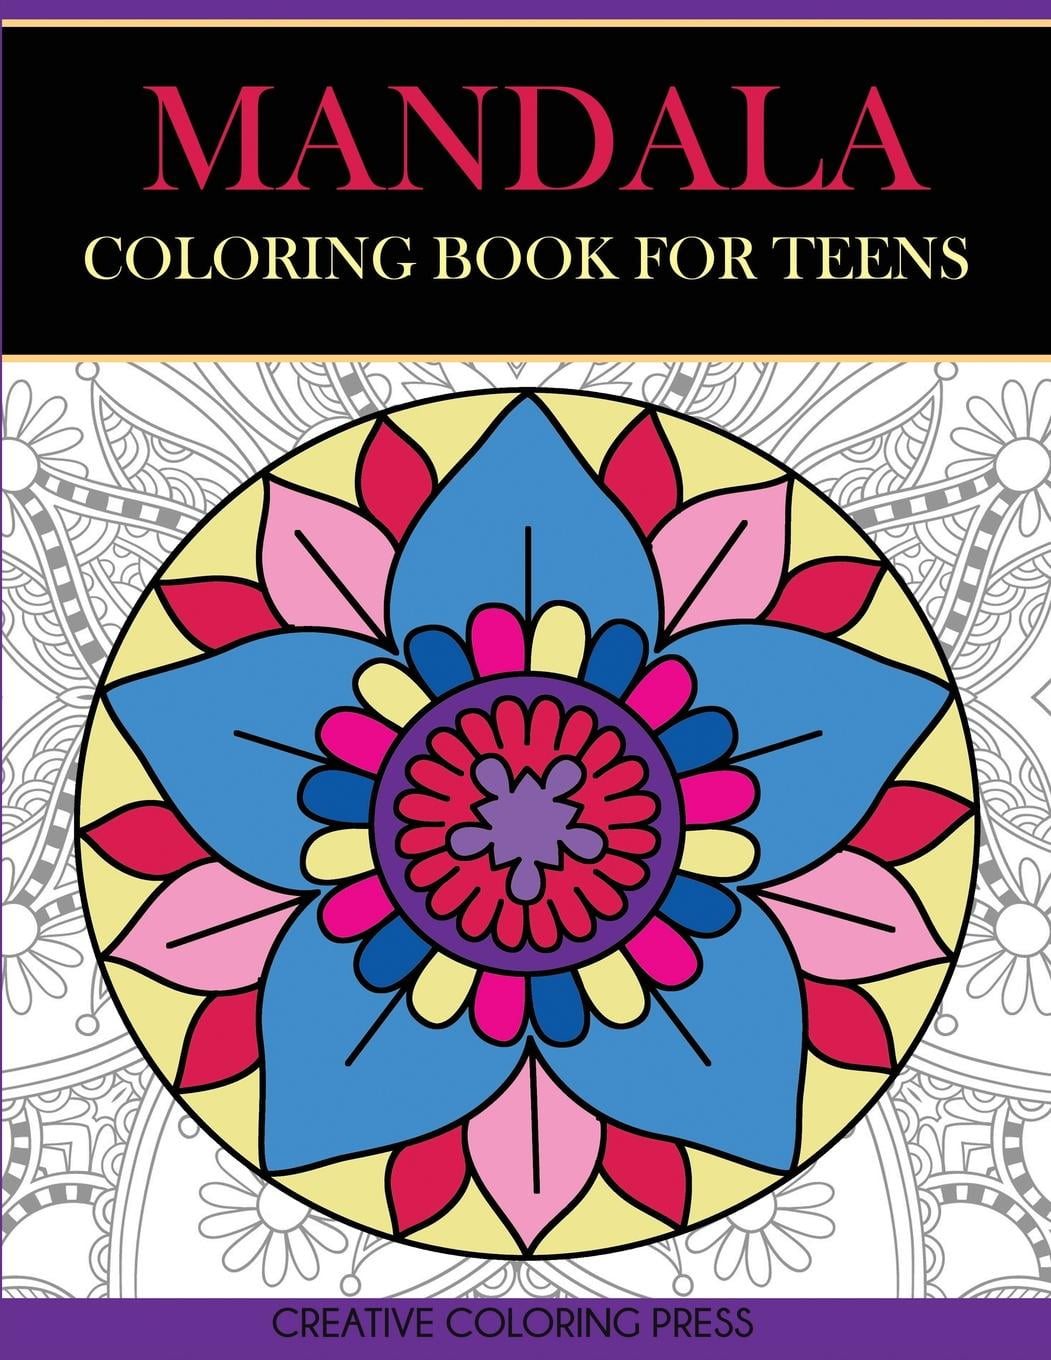 Coloring Books for Teens: Mandala Coloring Book for Teens: Get Creative